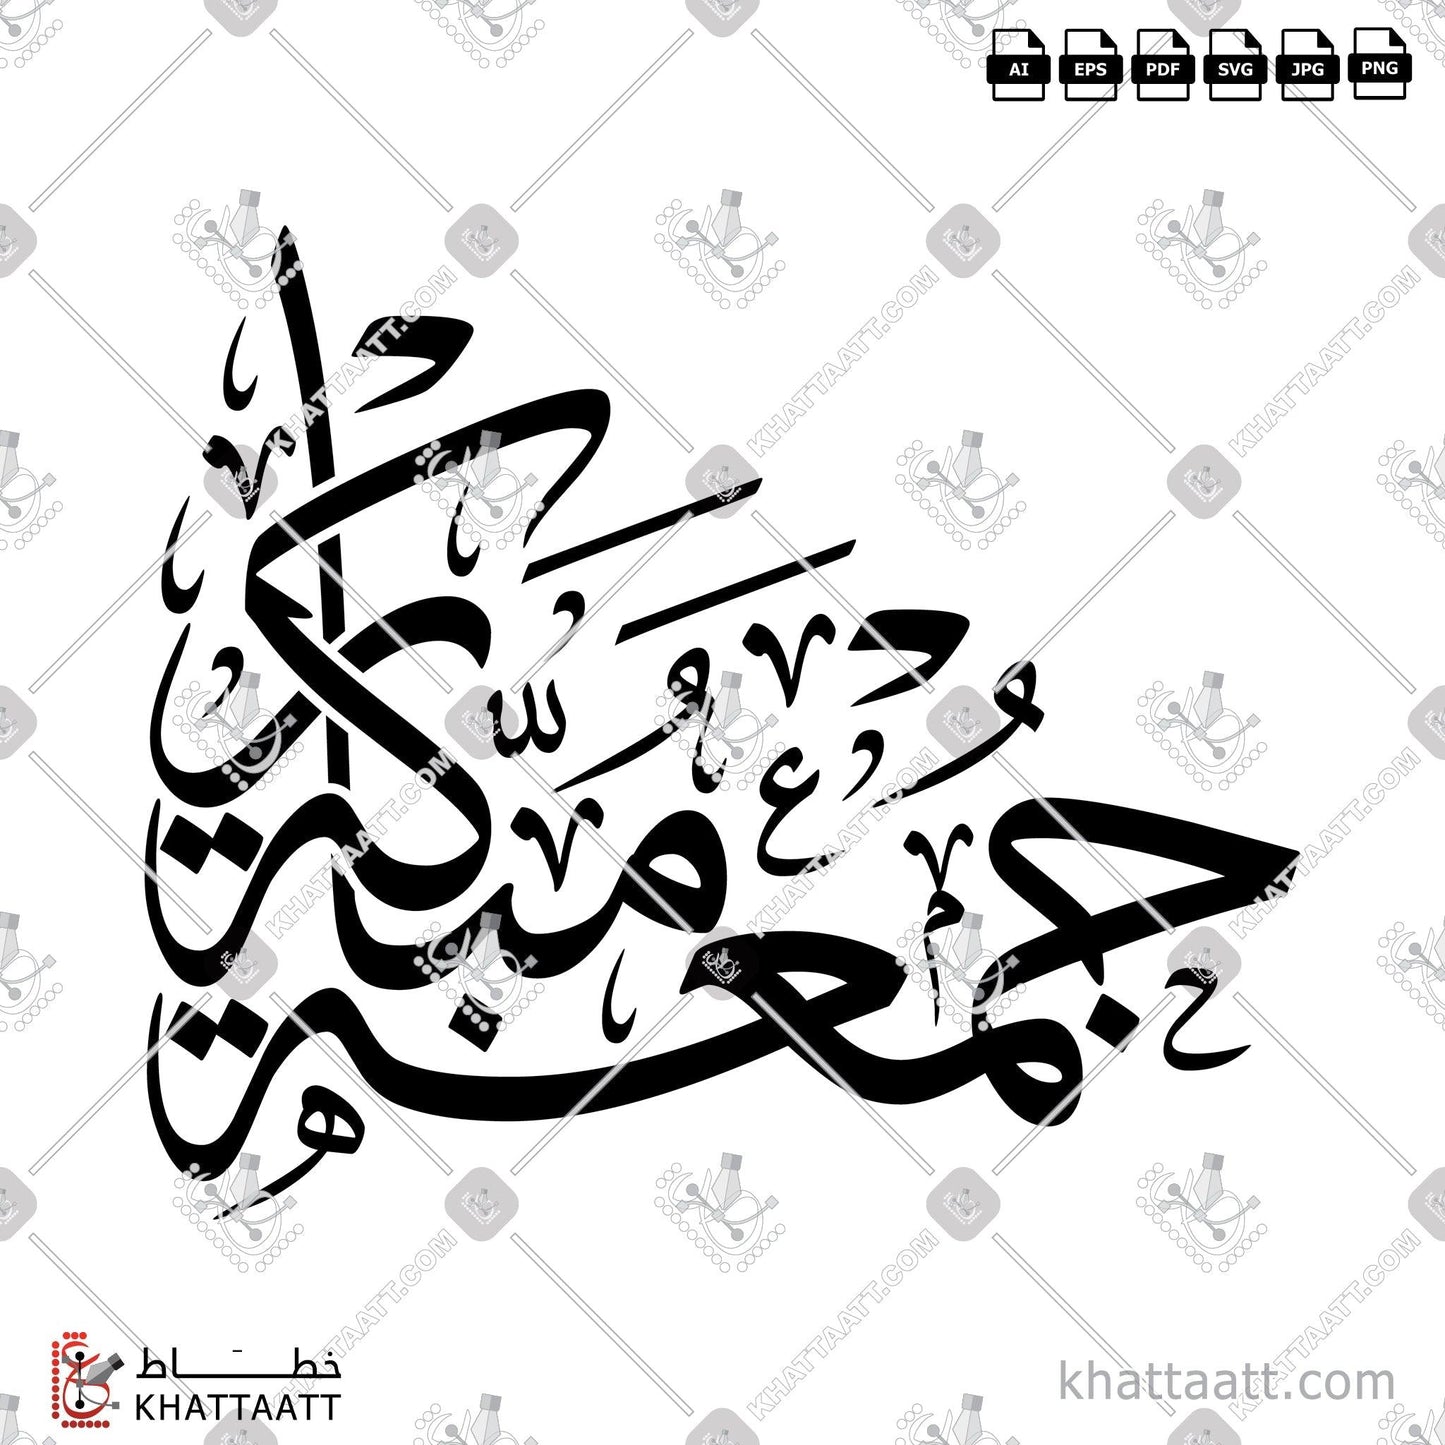 Download Arabic Calligraphy of Juma'a Mubarakah - جمعة مباركة in Thuluth - خط الثلث in vector and .png